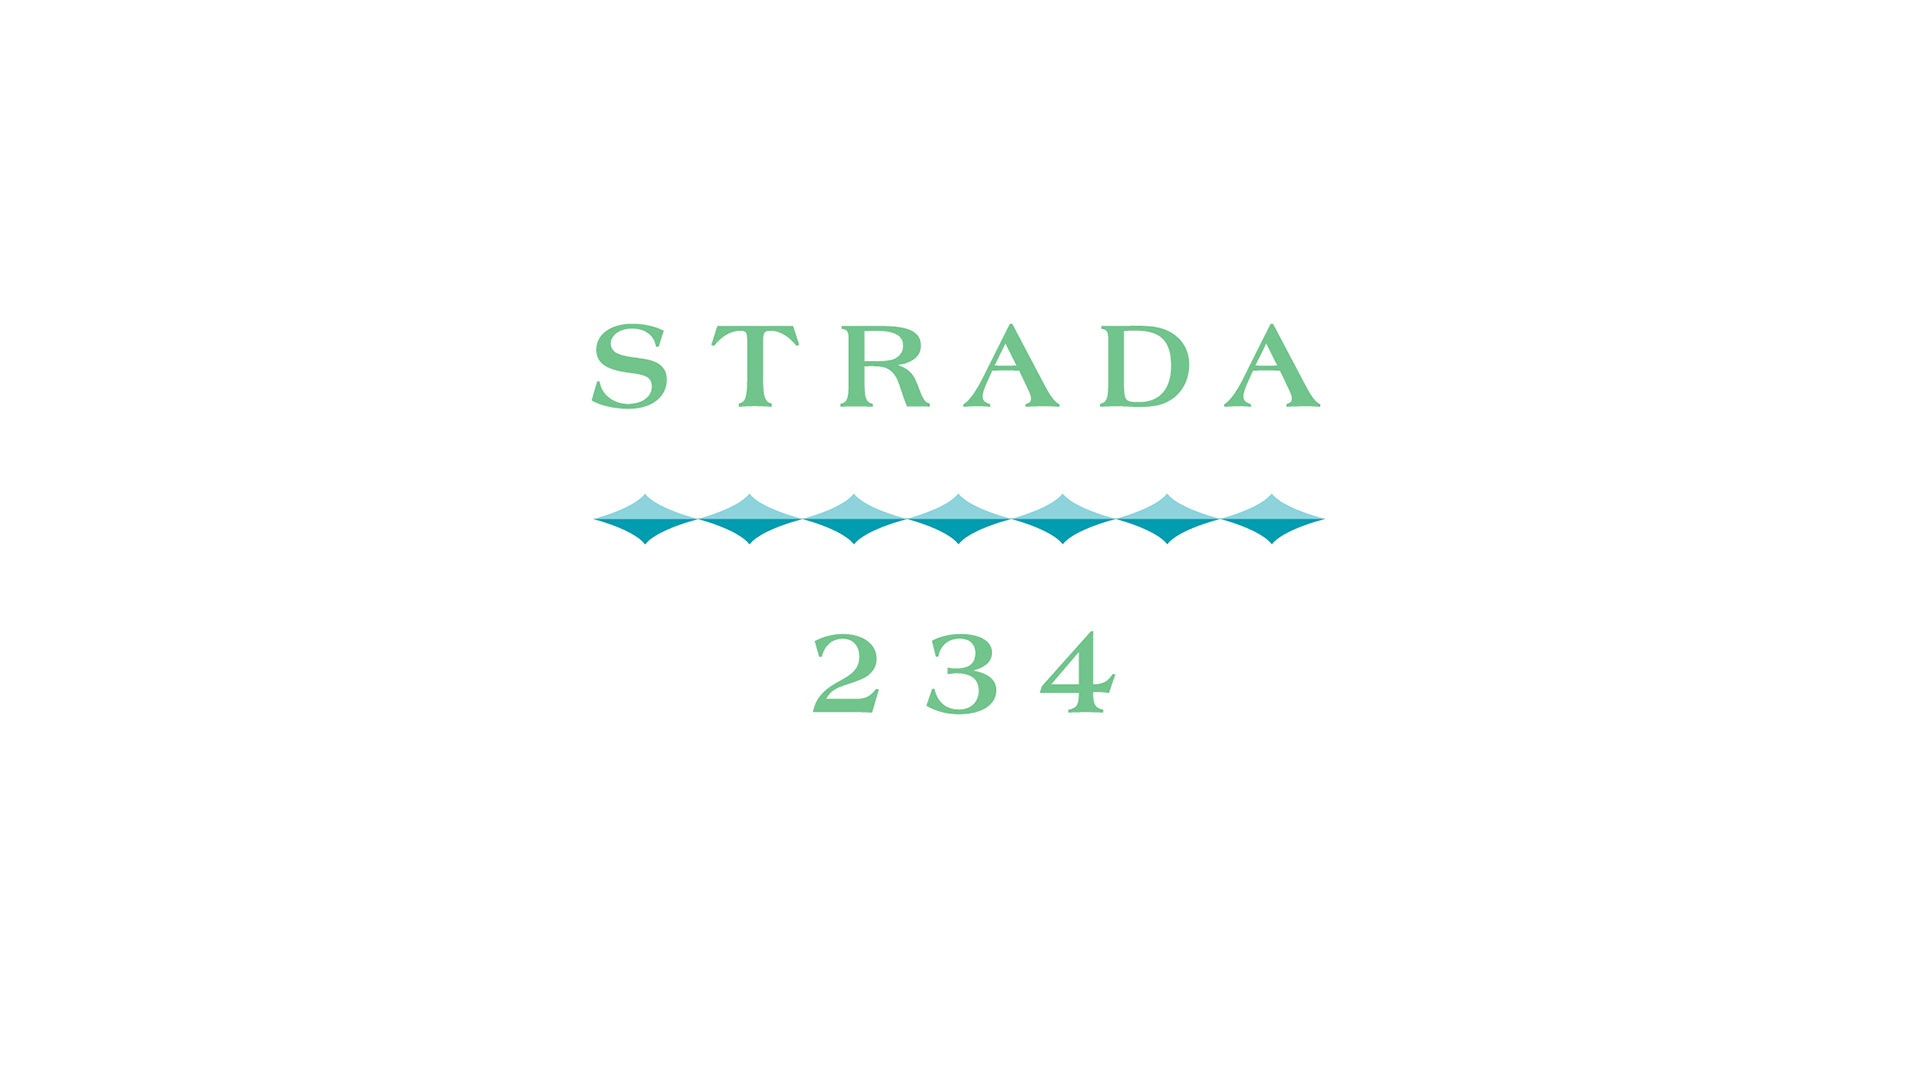 strada 234 logo on white by boston logo designer